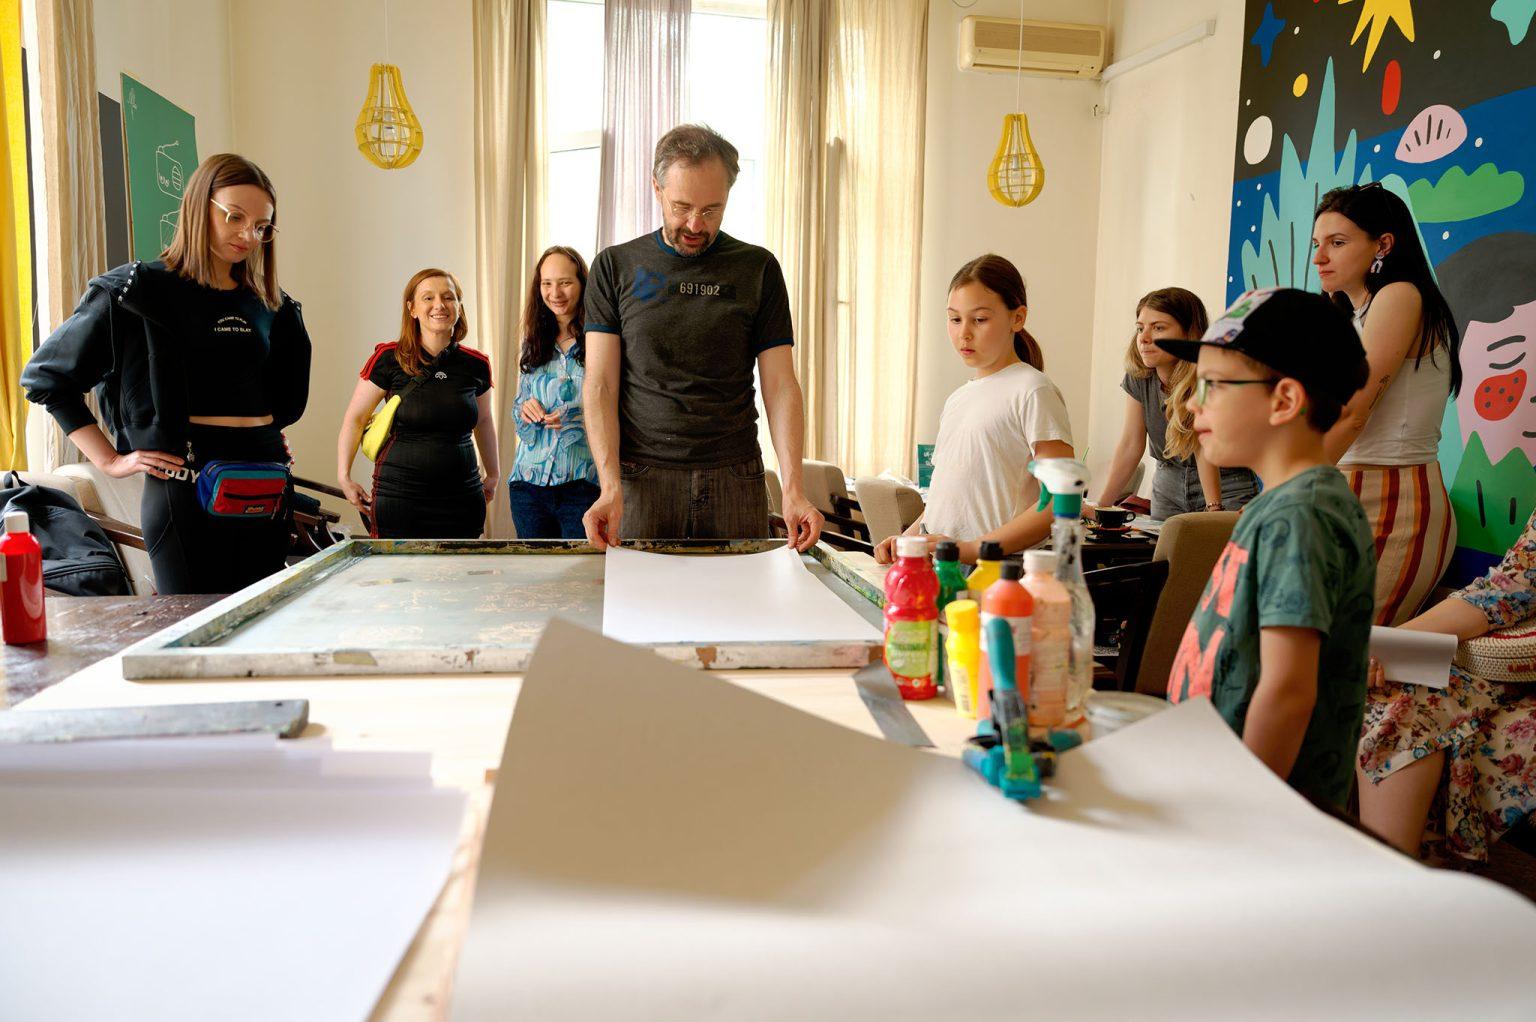 Un-hidden Romania workshop with Serebe drawing & Octav screen printing